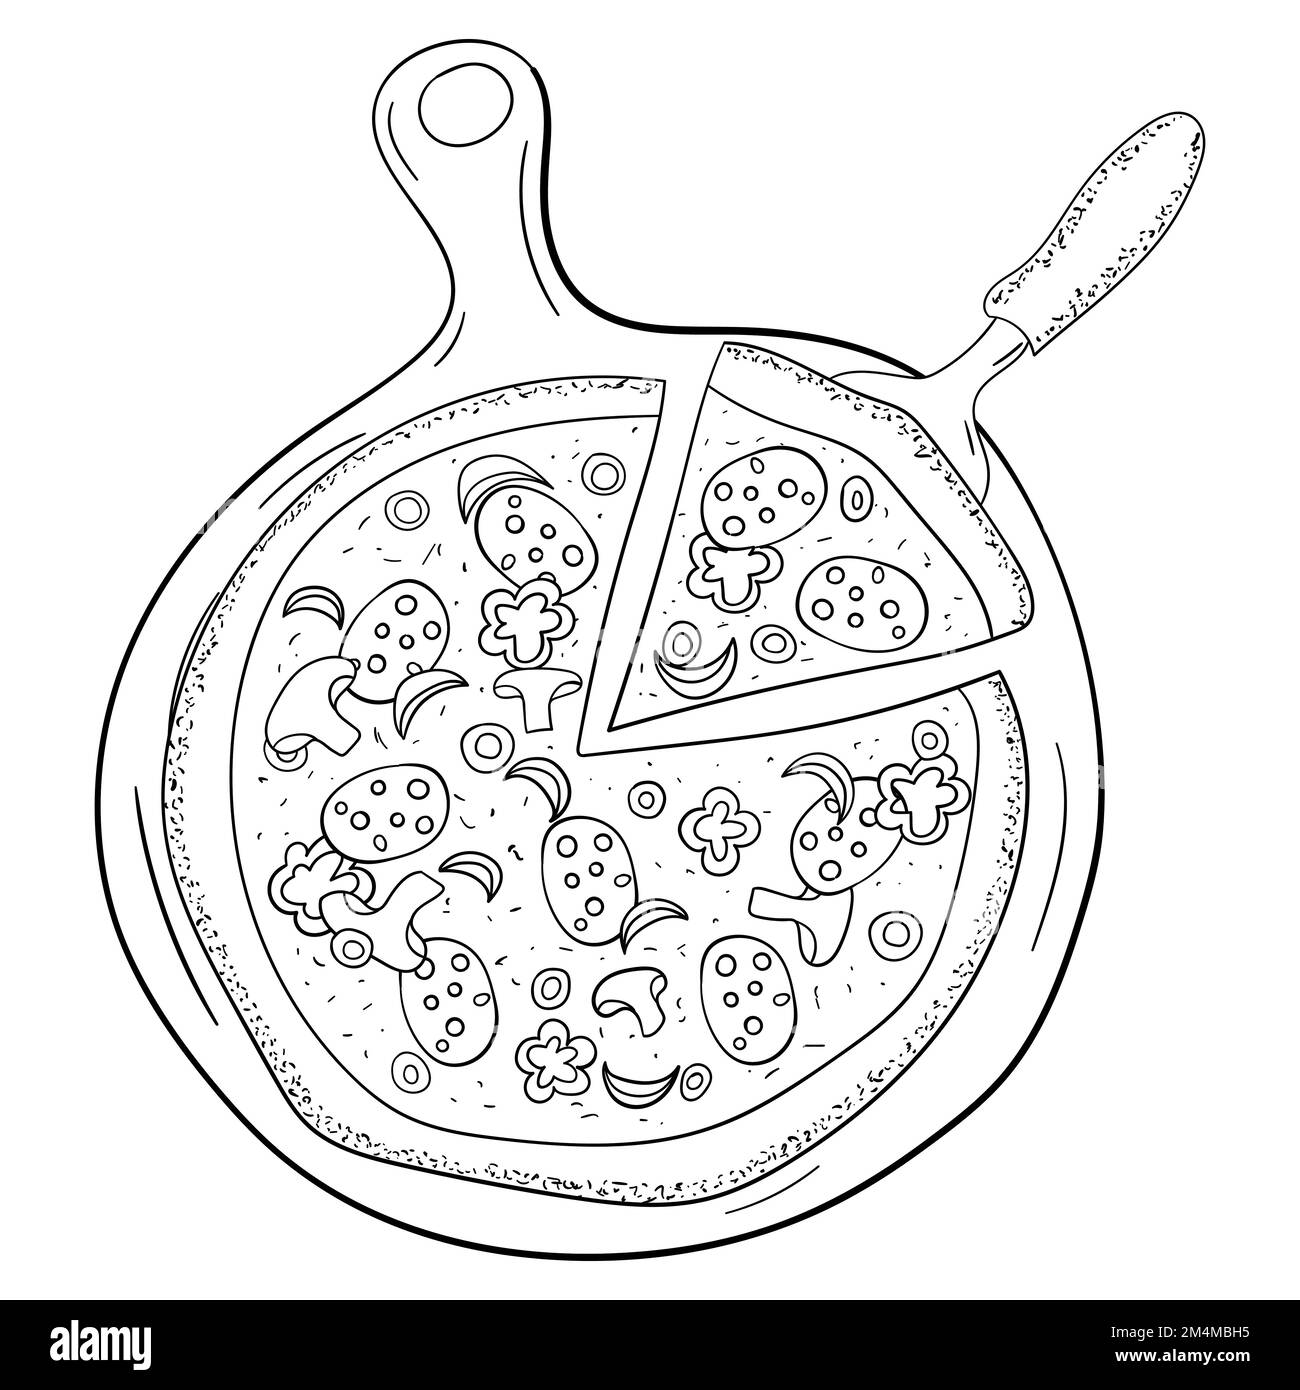 Pizza auf einem runden Brett-Kunstvektor Stock Vektor